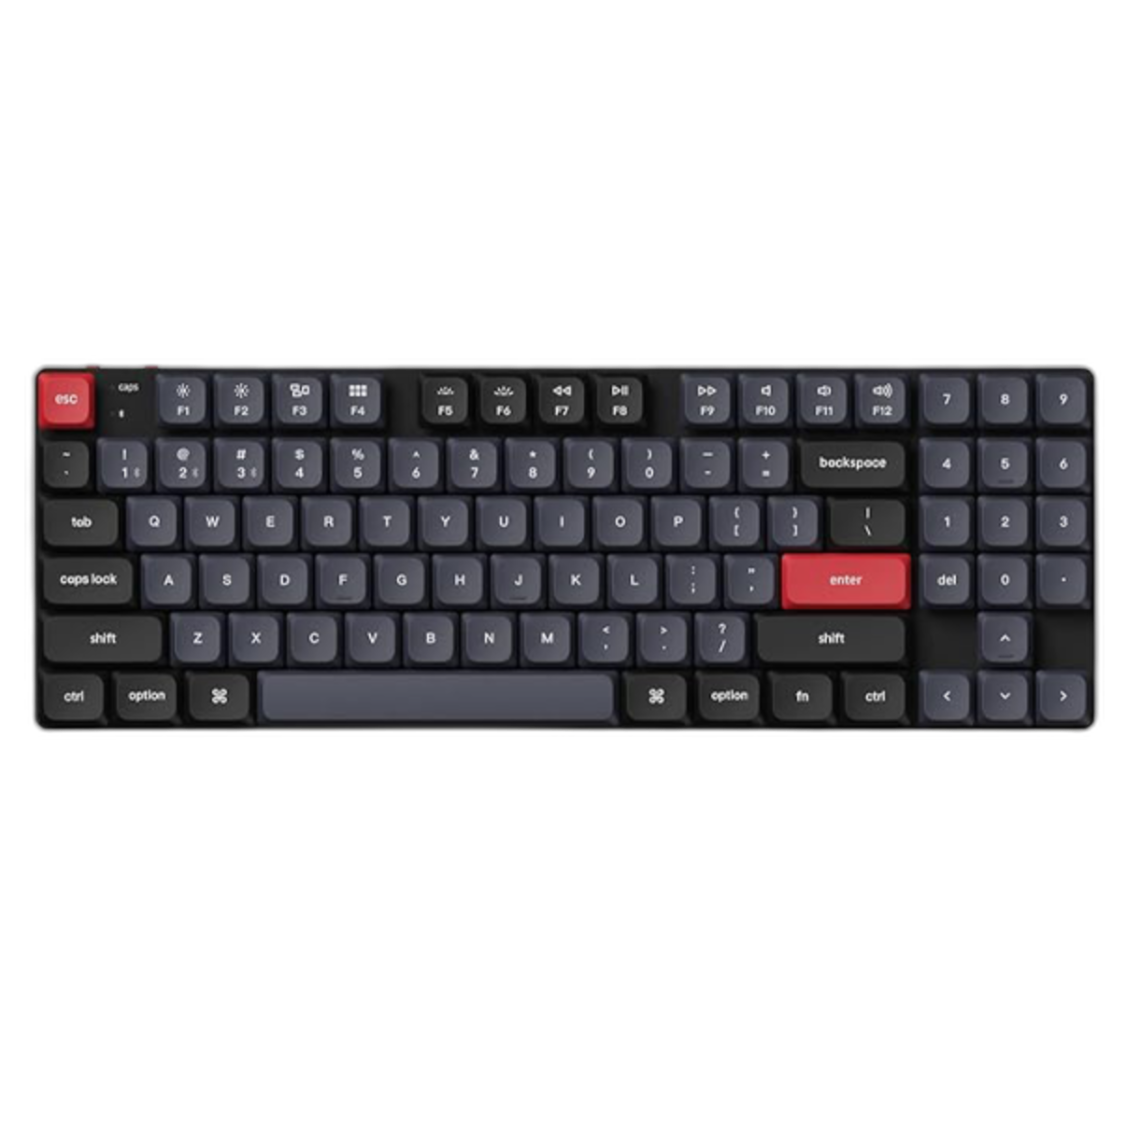 Keychron K13 Pro mechanical keyboard with black and grey keys